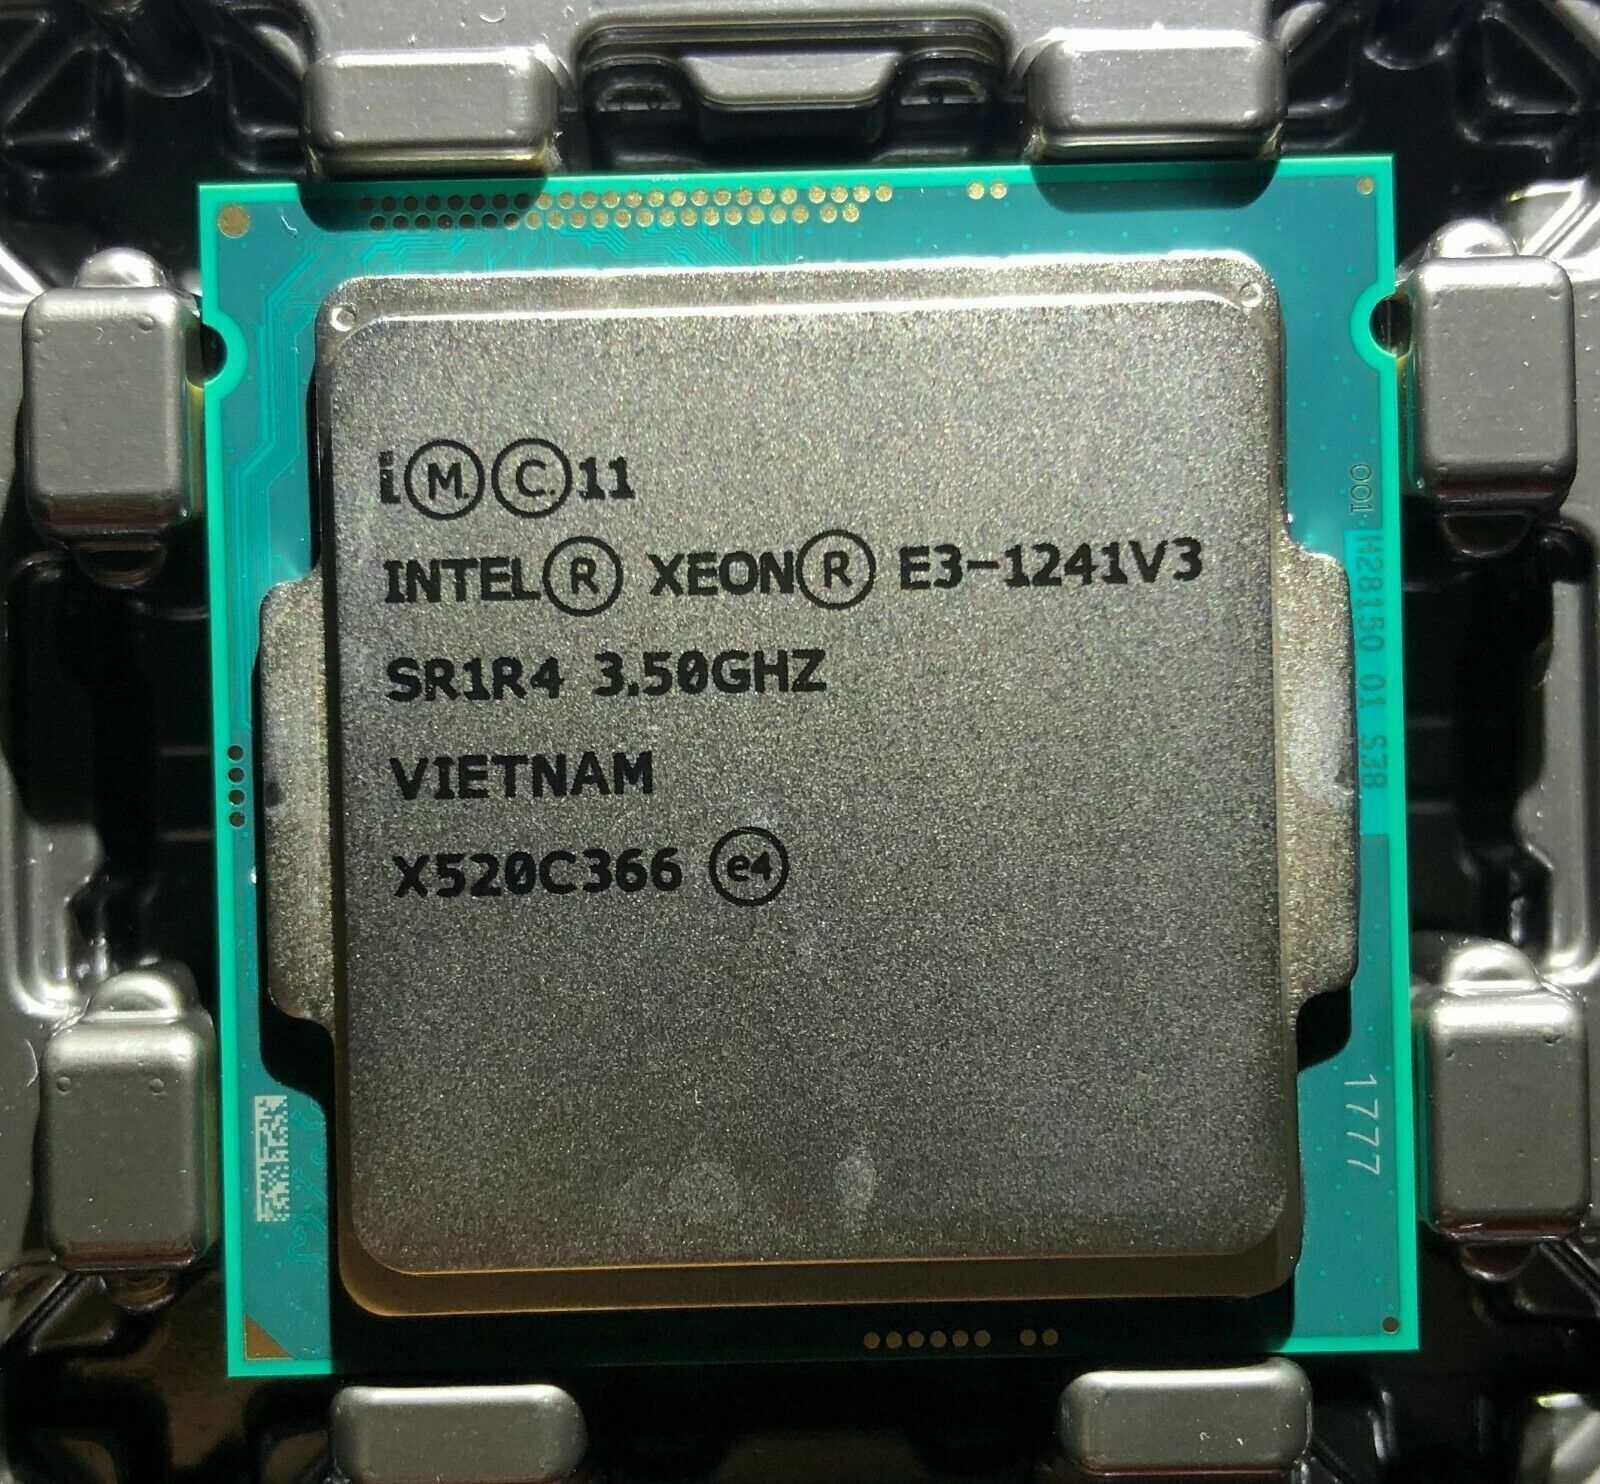 QuCore Xeon E3-1241v3 E3-1241 V3 3.50GHz A1150 SR1R4 CPU Processor #WD6